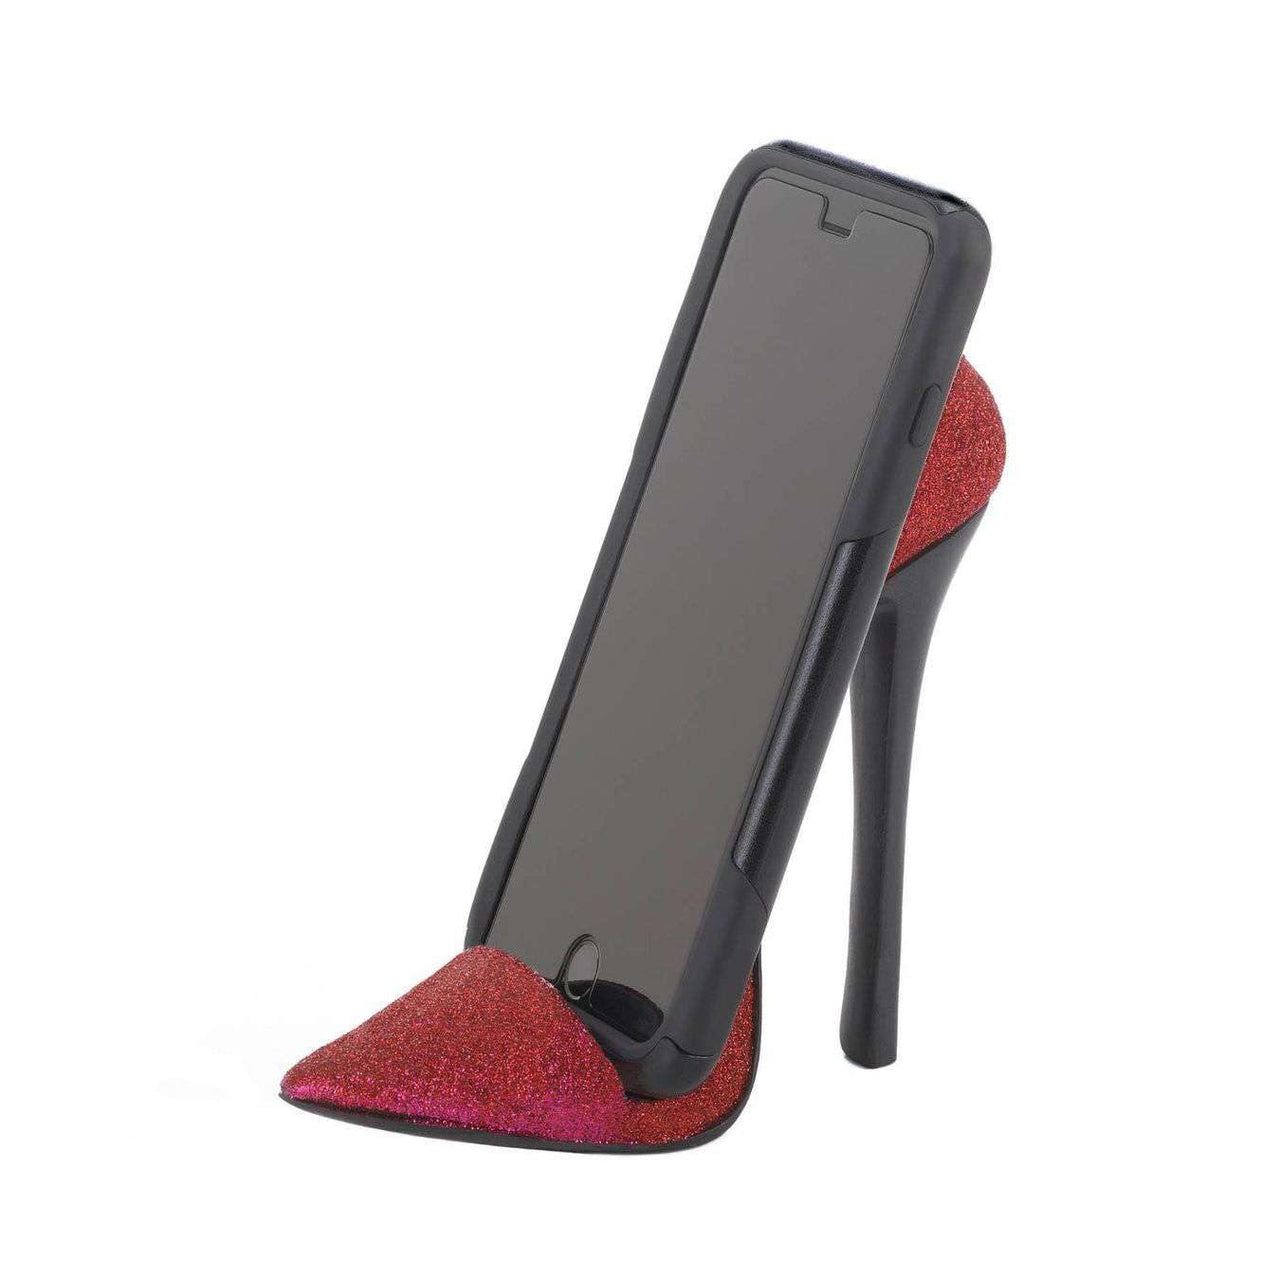 Sparkle Red Shoe Phone Holder